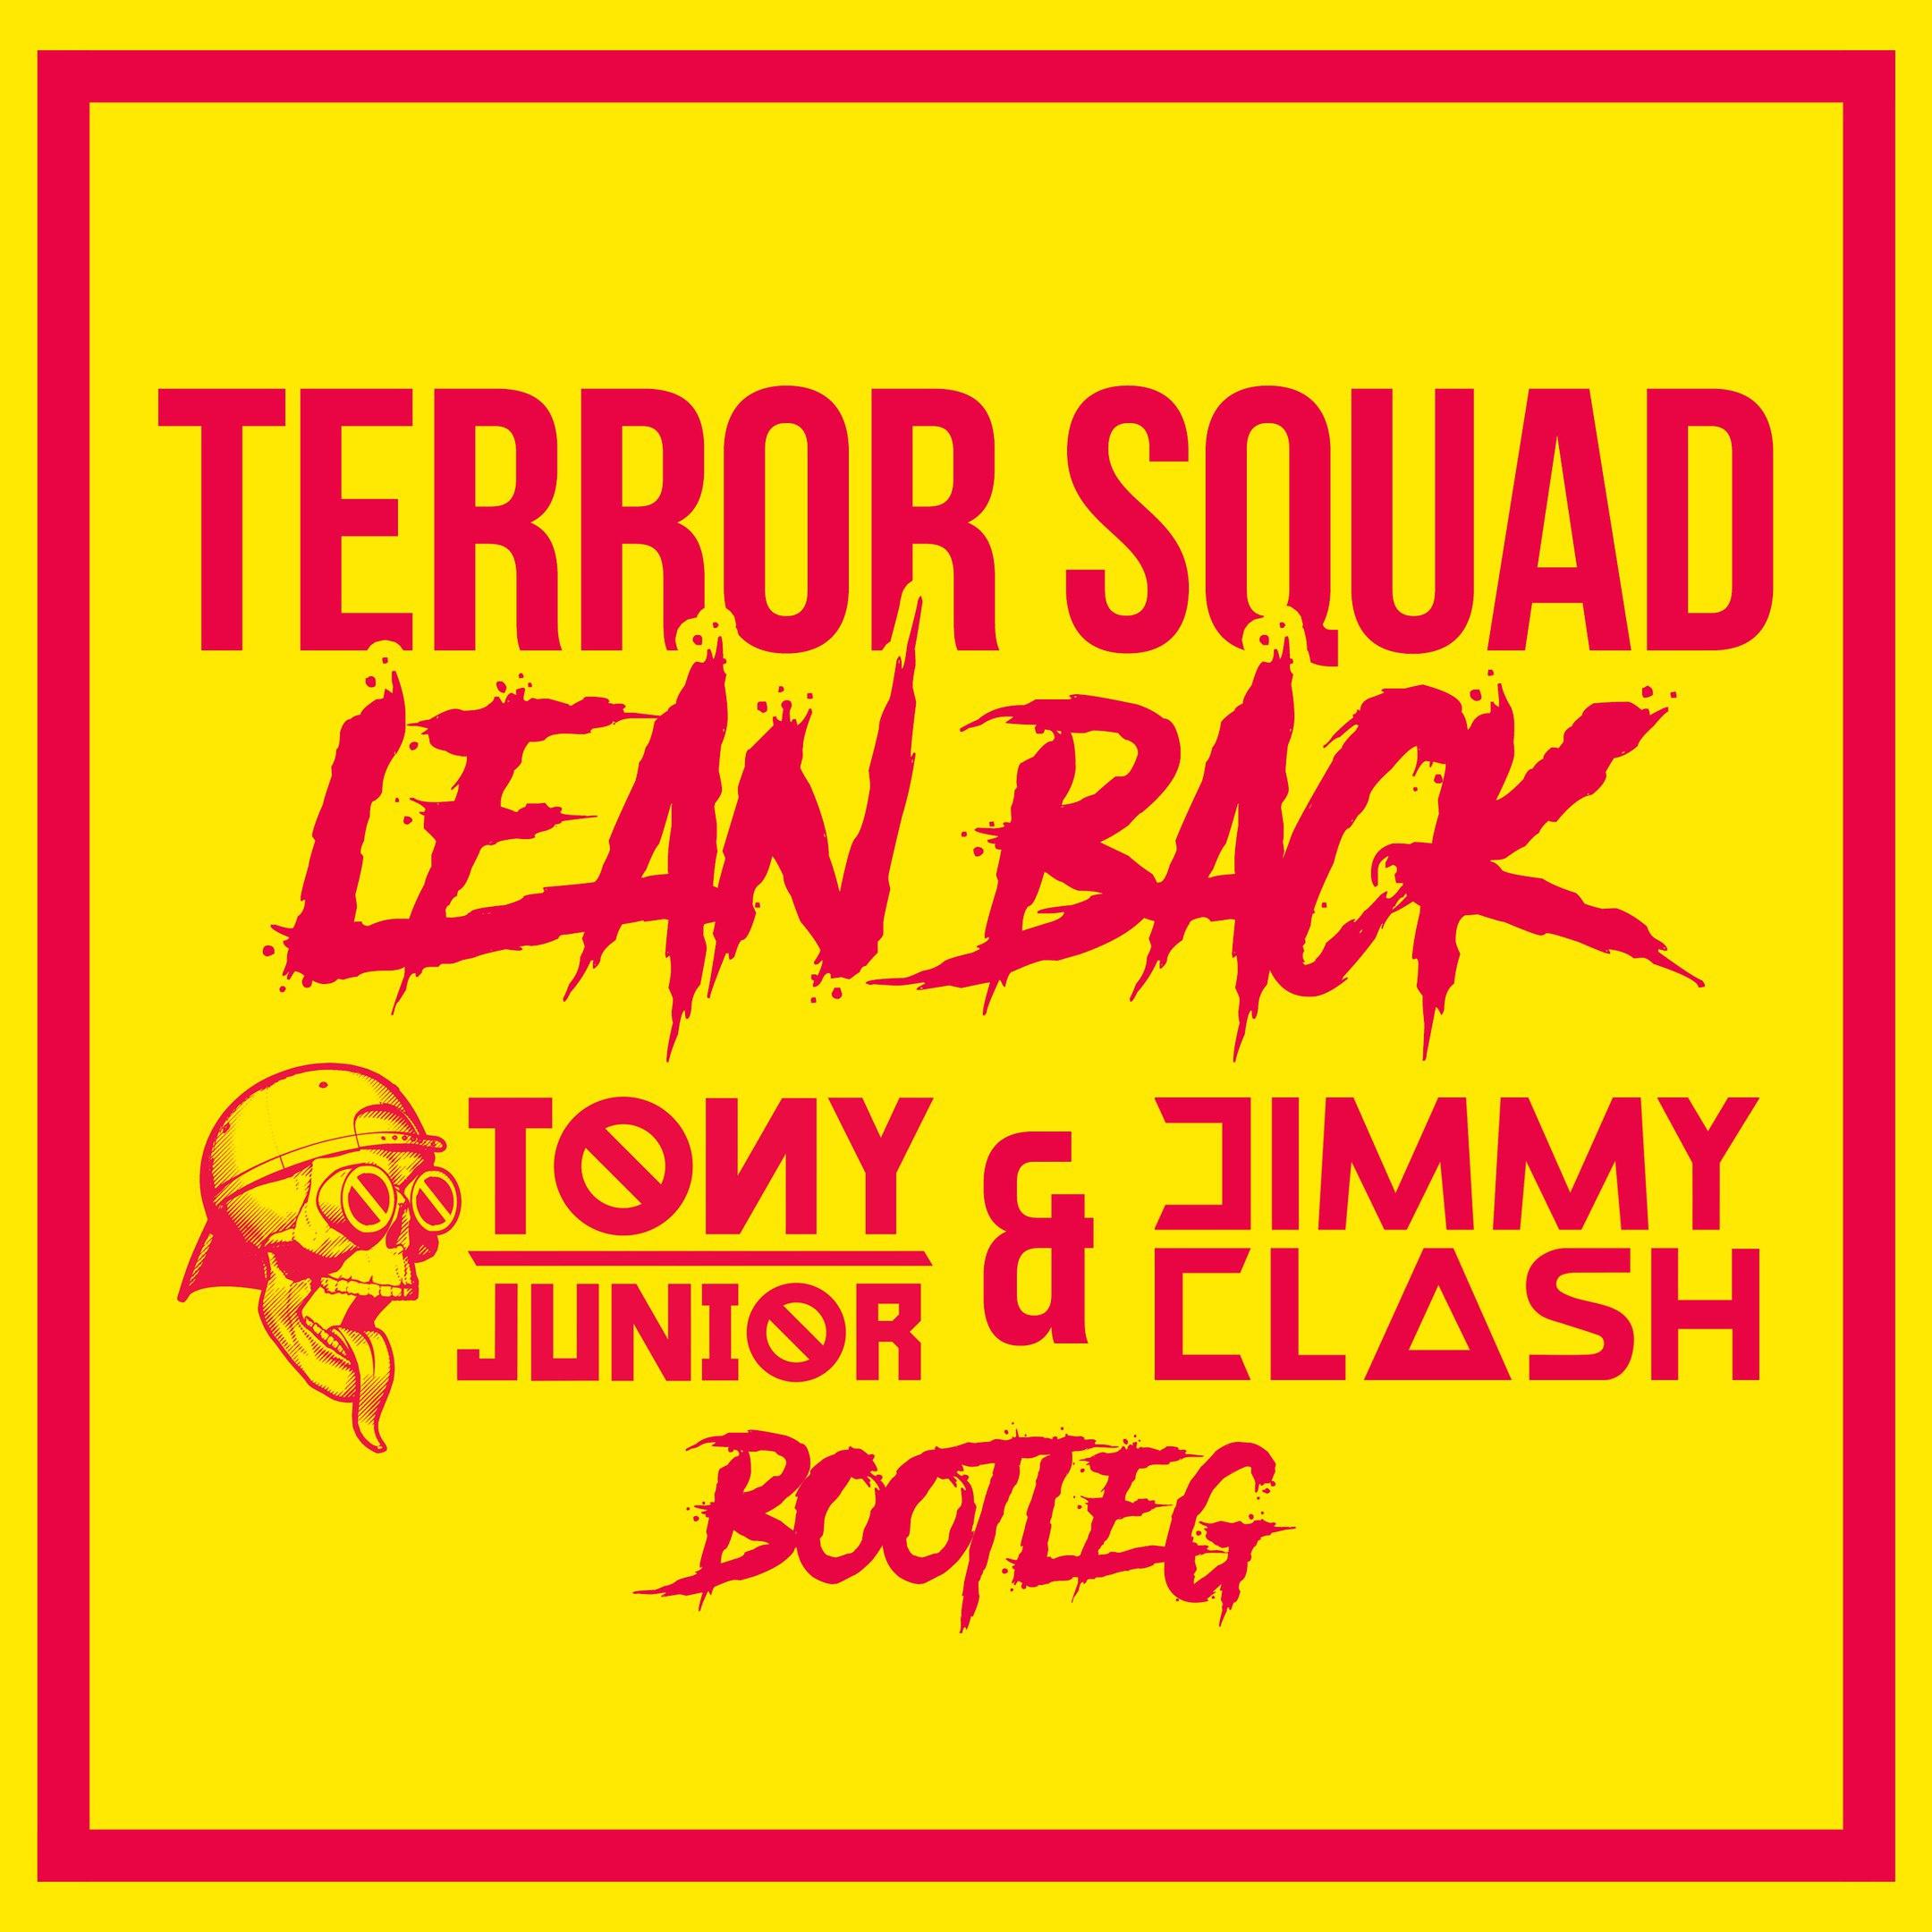 Lean Back (Tony Junior x Jimmy Clash Bootleg)